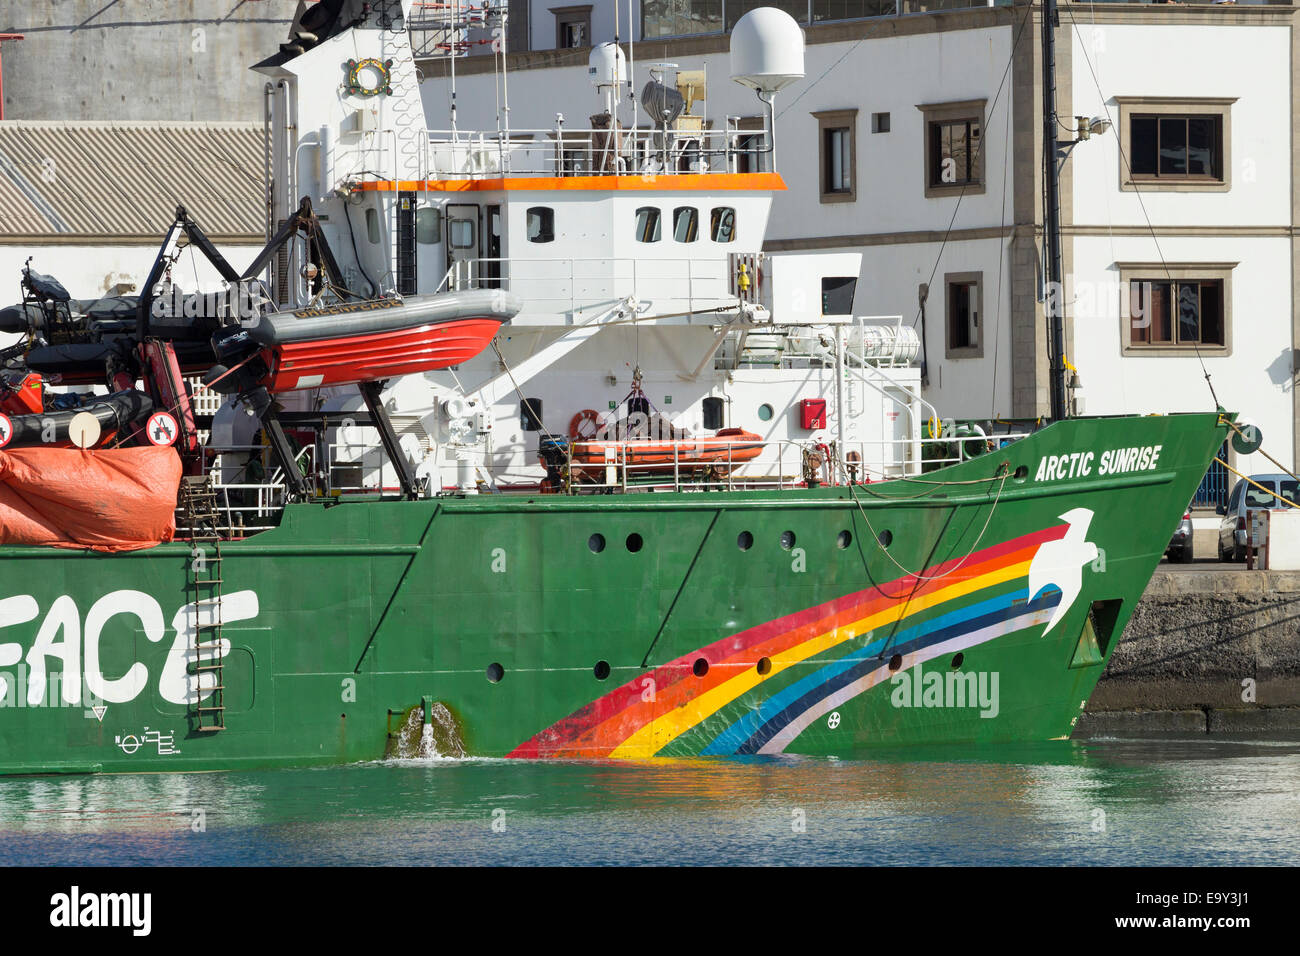 Greenpeace boat, Arctic sunrise in Las Palmas port. Stock Photo